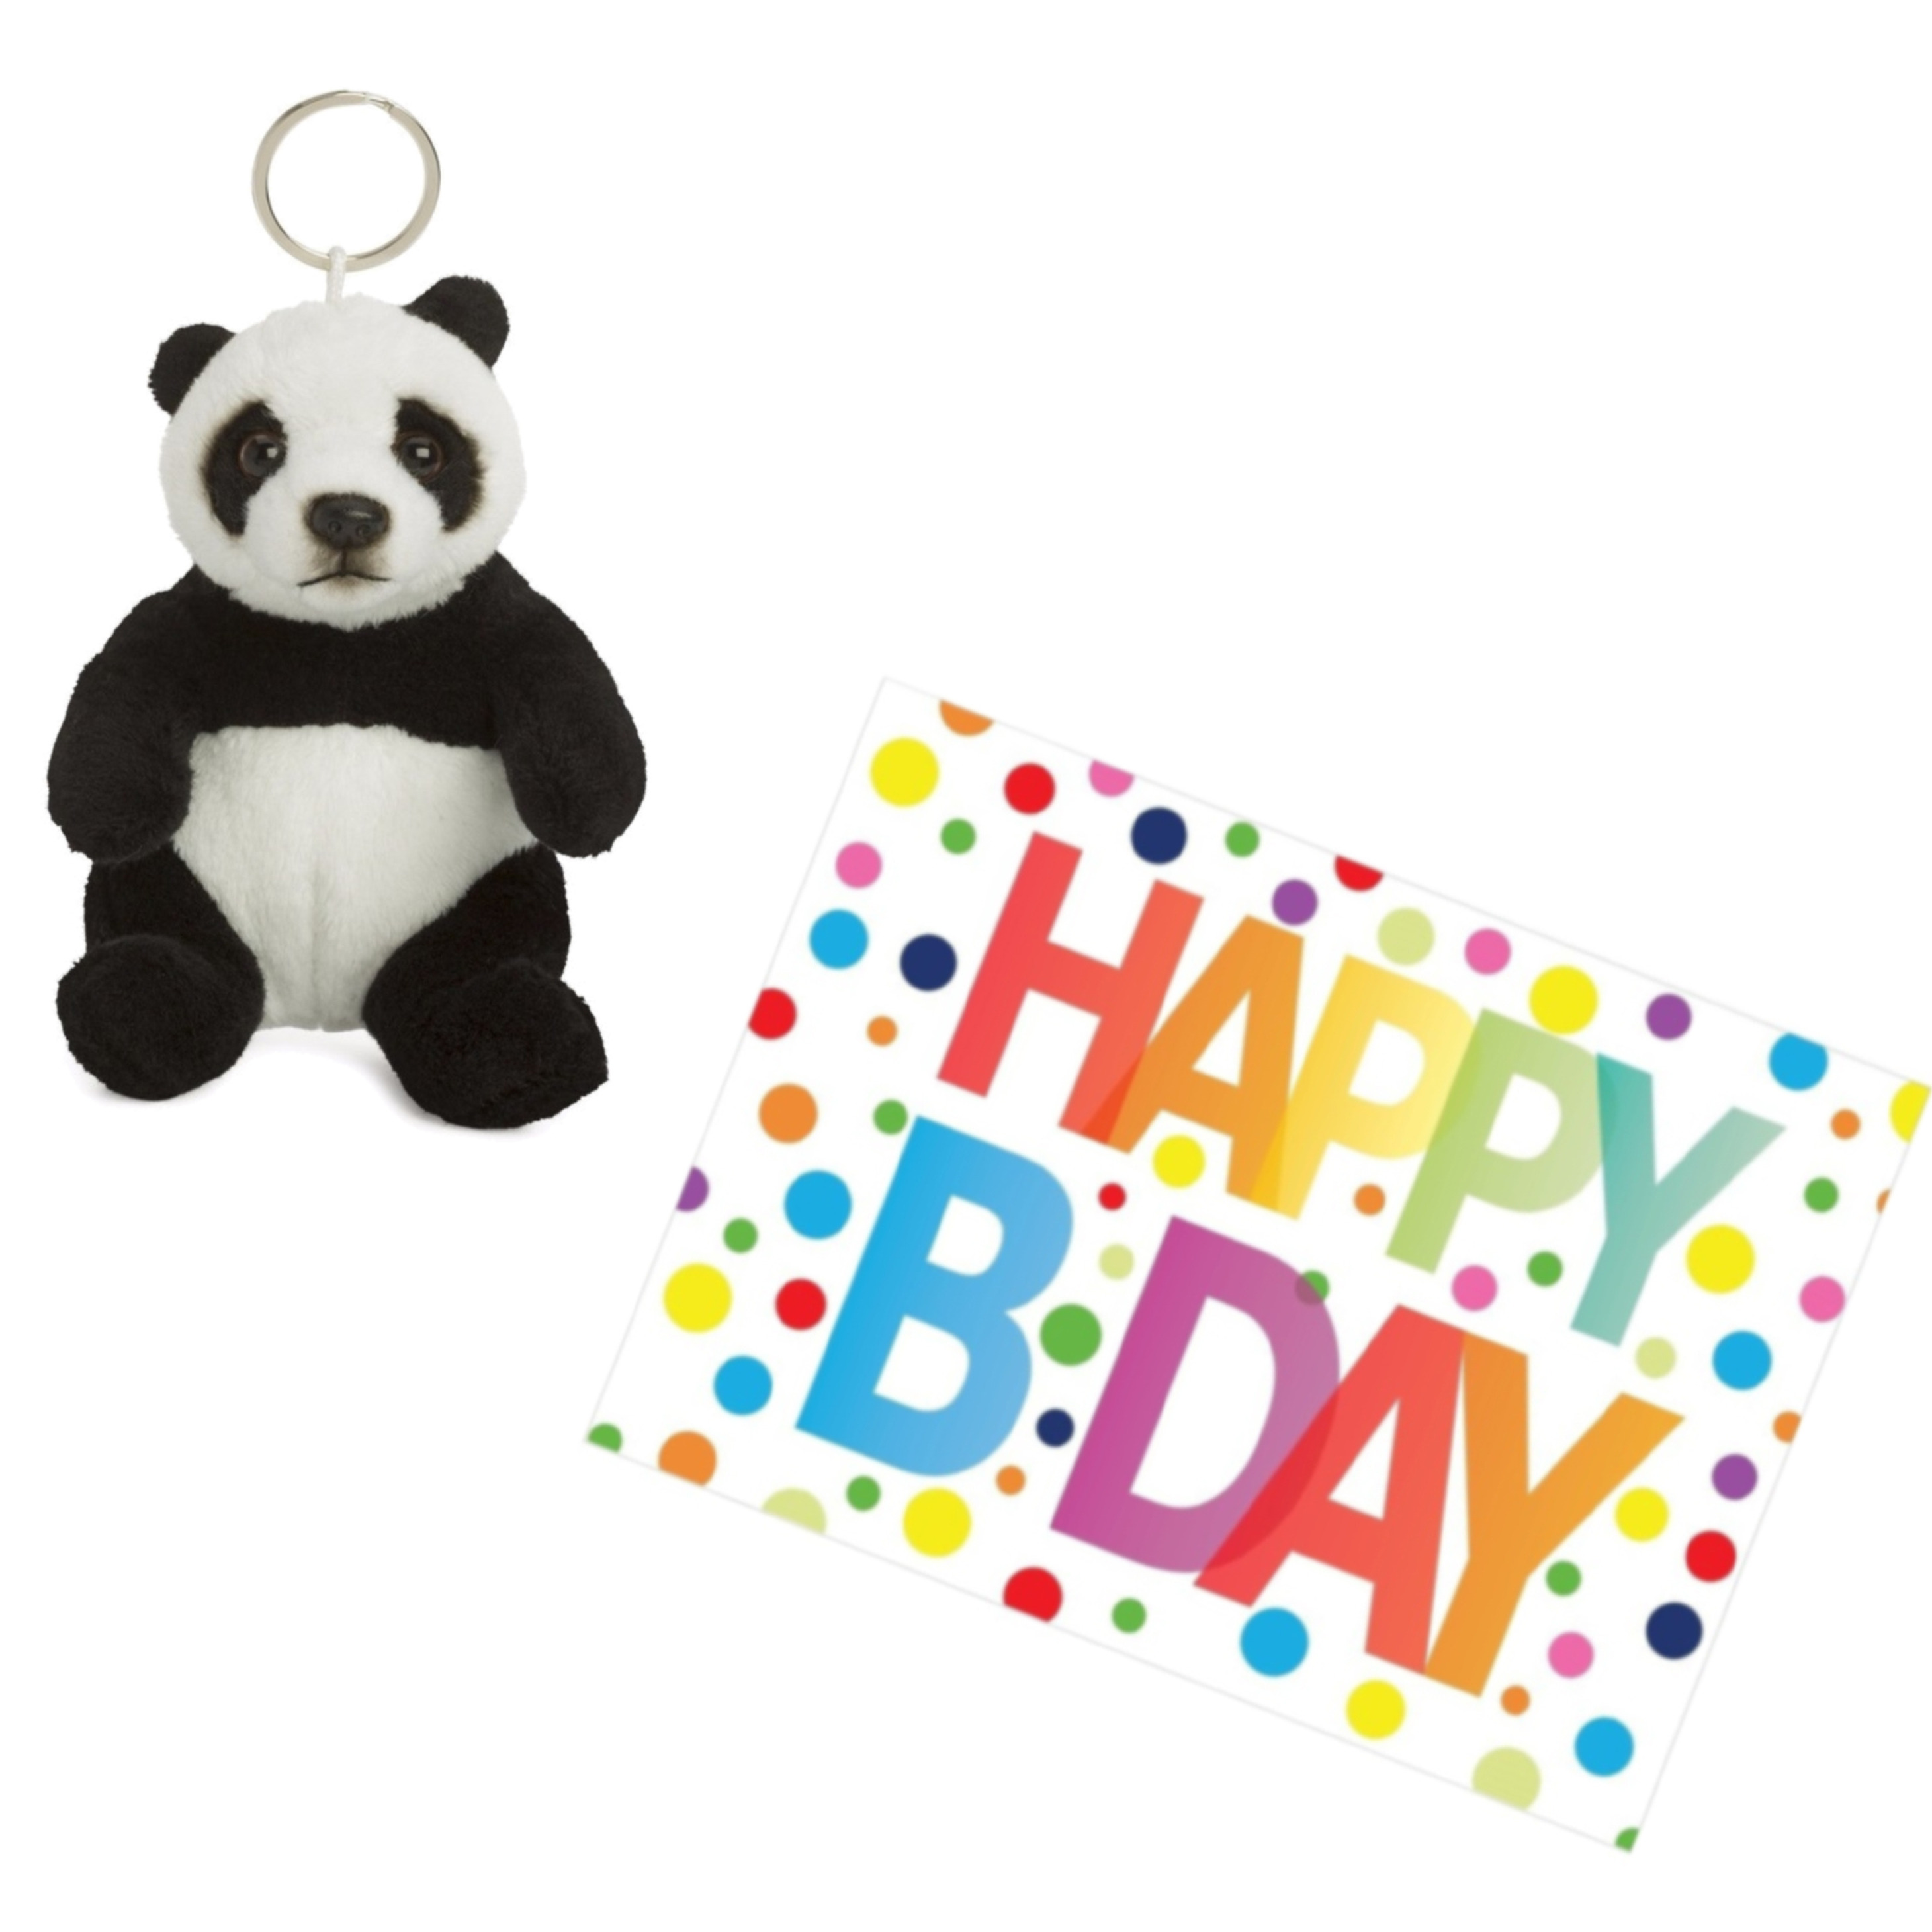 Pluche knuffel panda beer sleutelhanger 10 cm met A5-size Happy Birthday wenskaart - Verjaardag cadeau setje